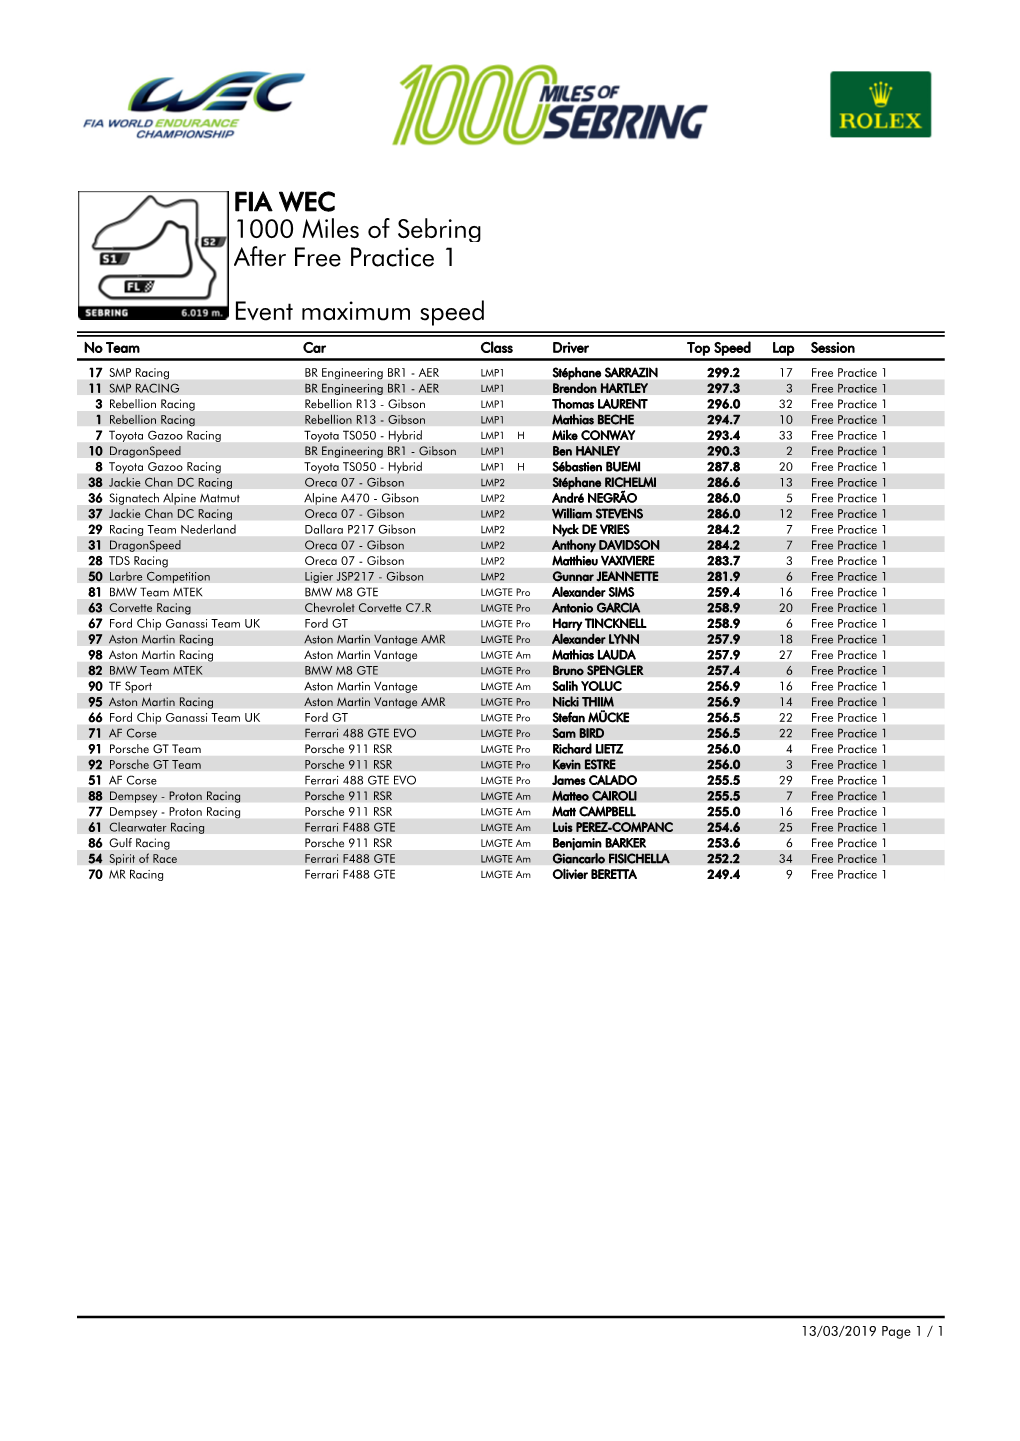 Event Maximum Speed Free Practice 1 1000 Miles of Sebring FIA WEC After